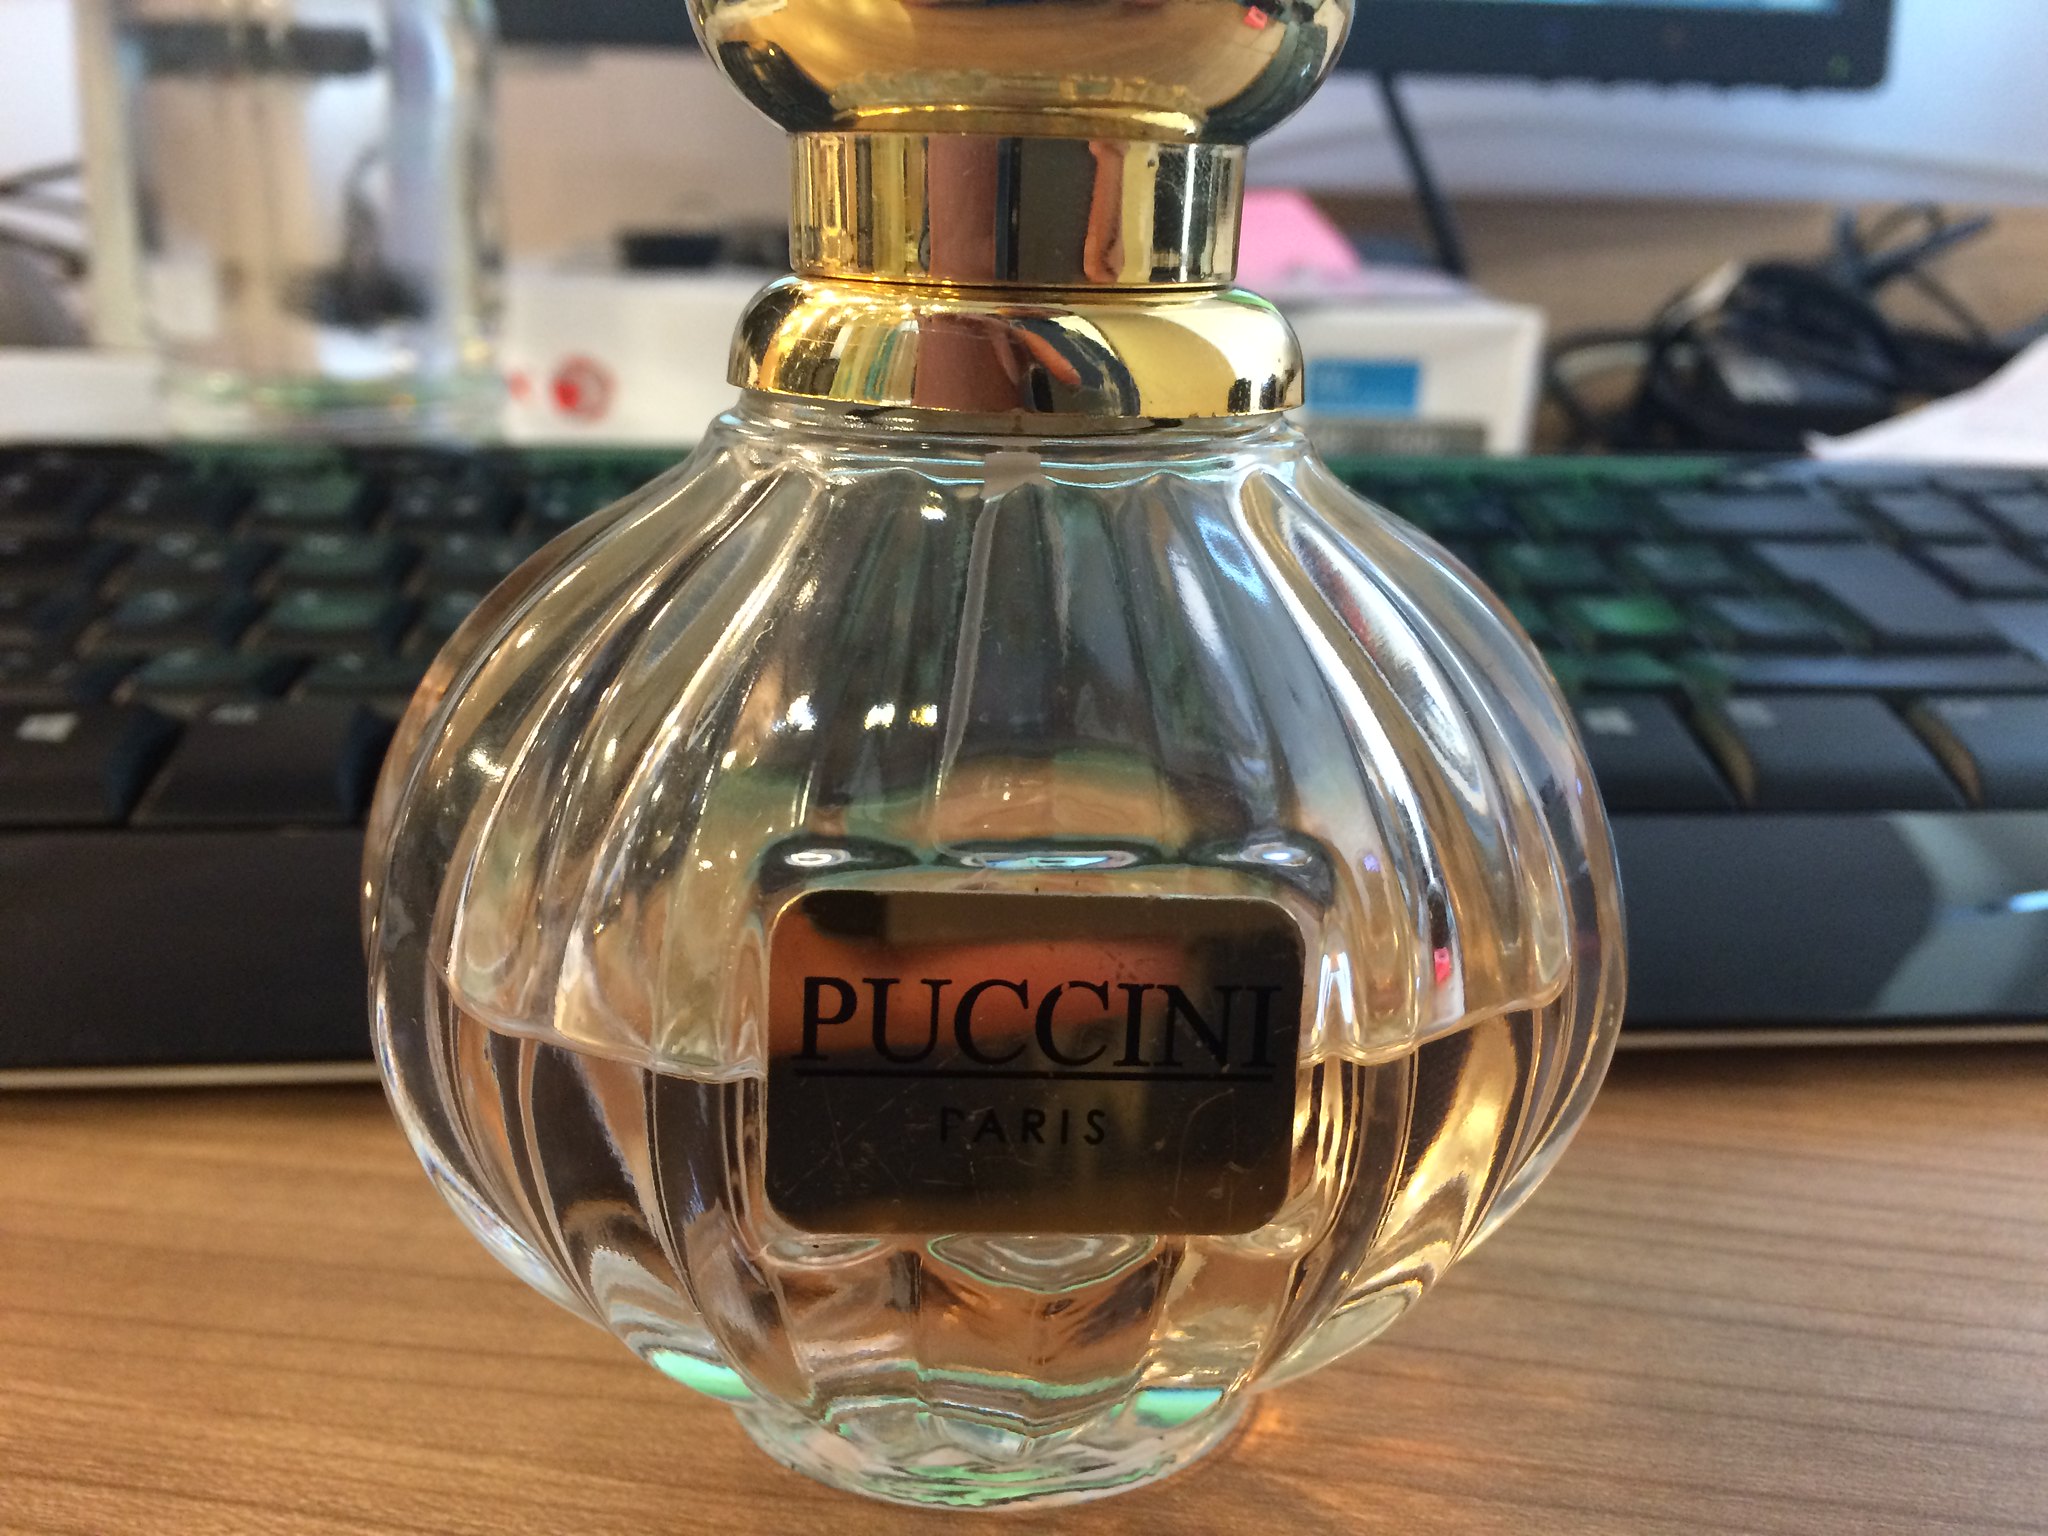 Puccini parfüm